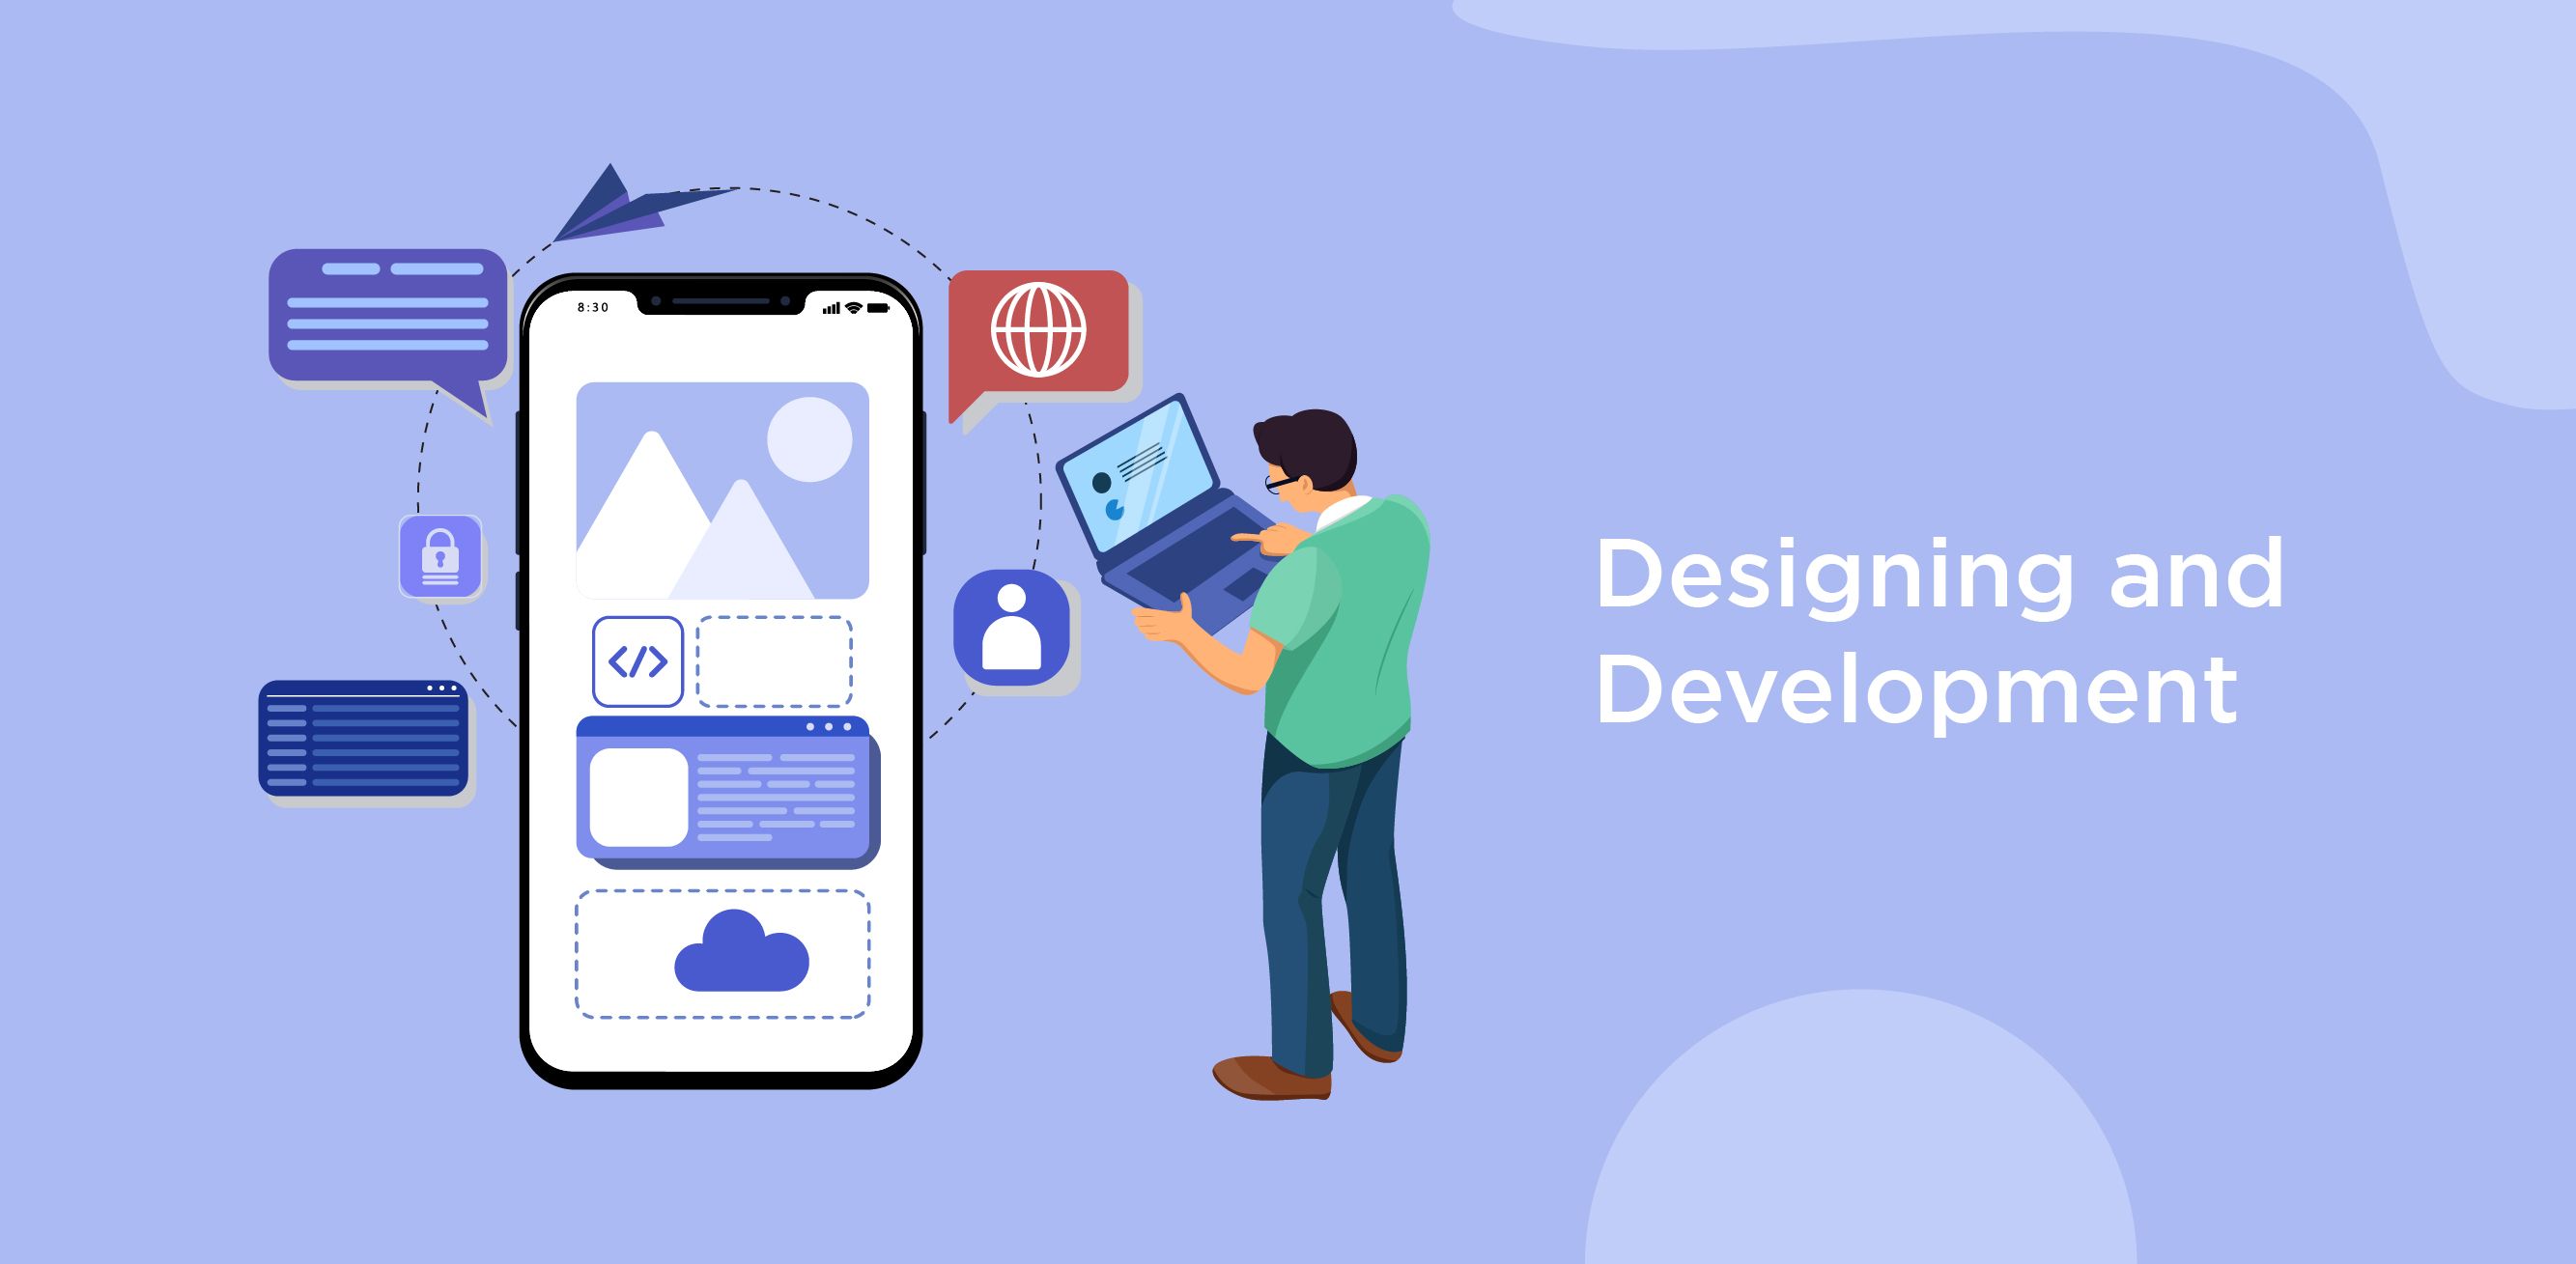 Designing and Development